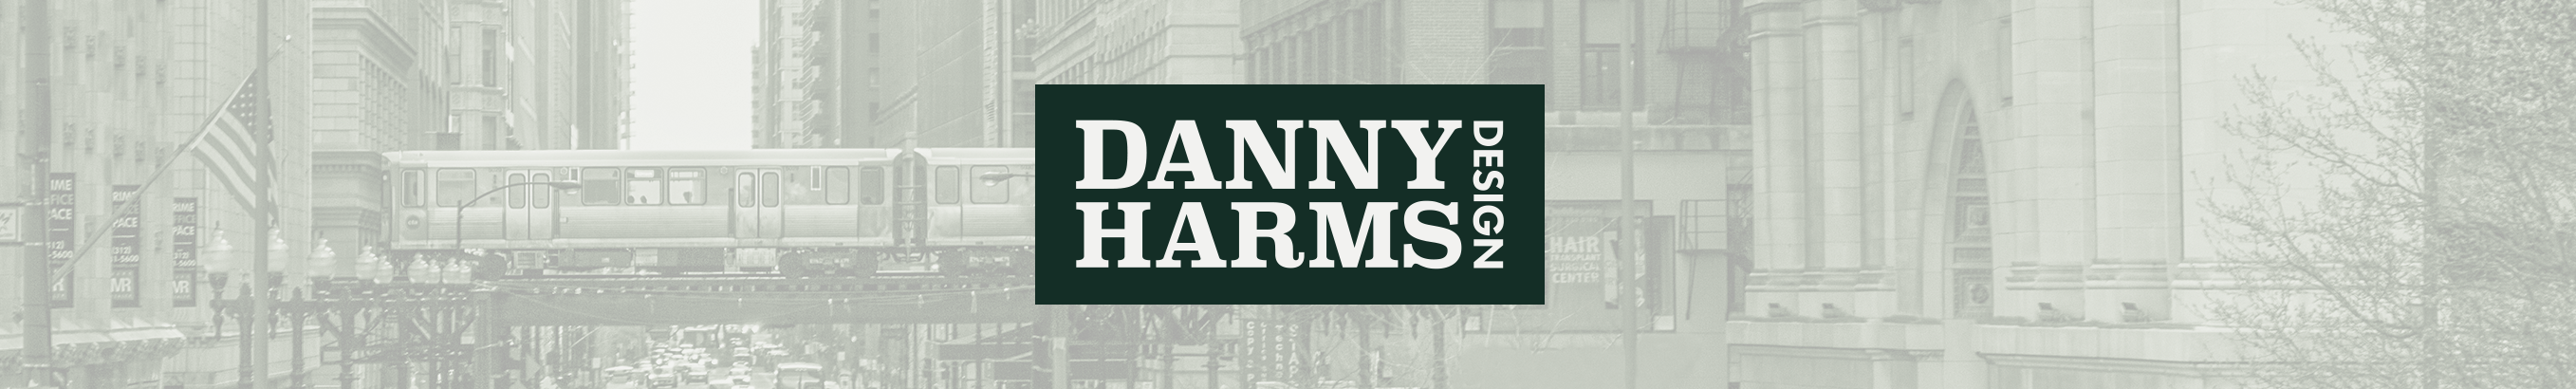 Baner profilu użytkownika Danny Harms